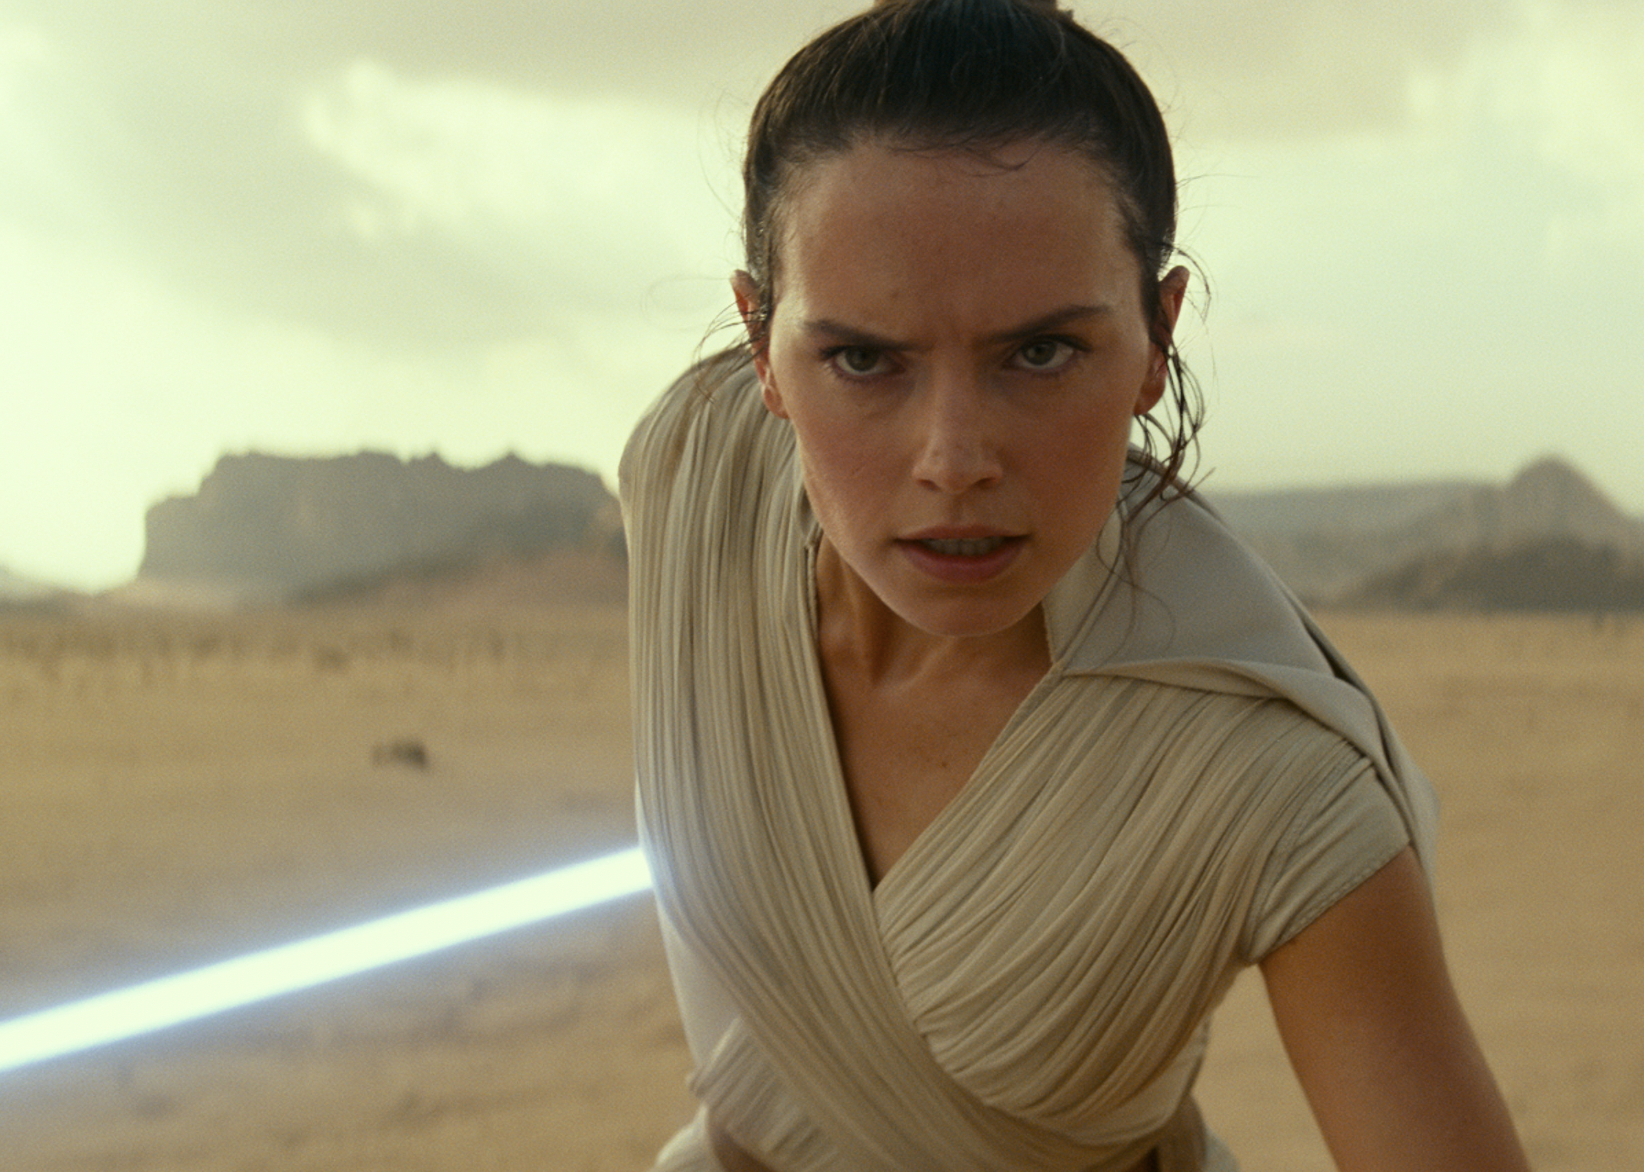 Daisy Ridley in "Star Wars: Episode IX - The Rise of Skywalker"